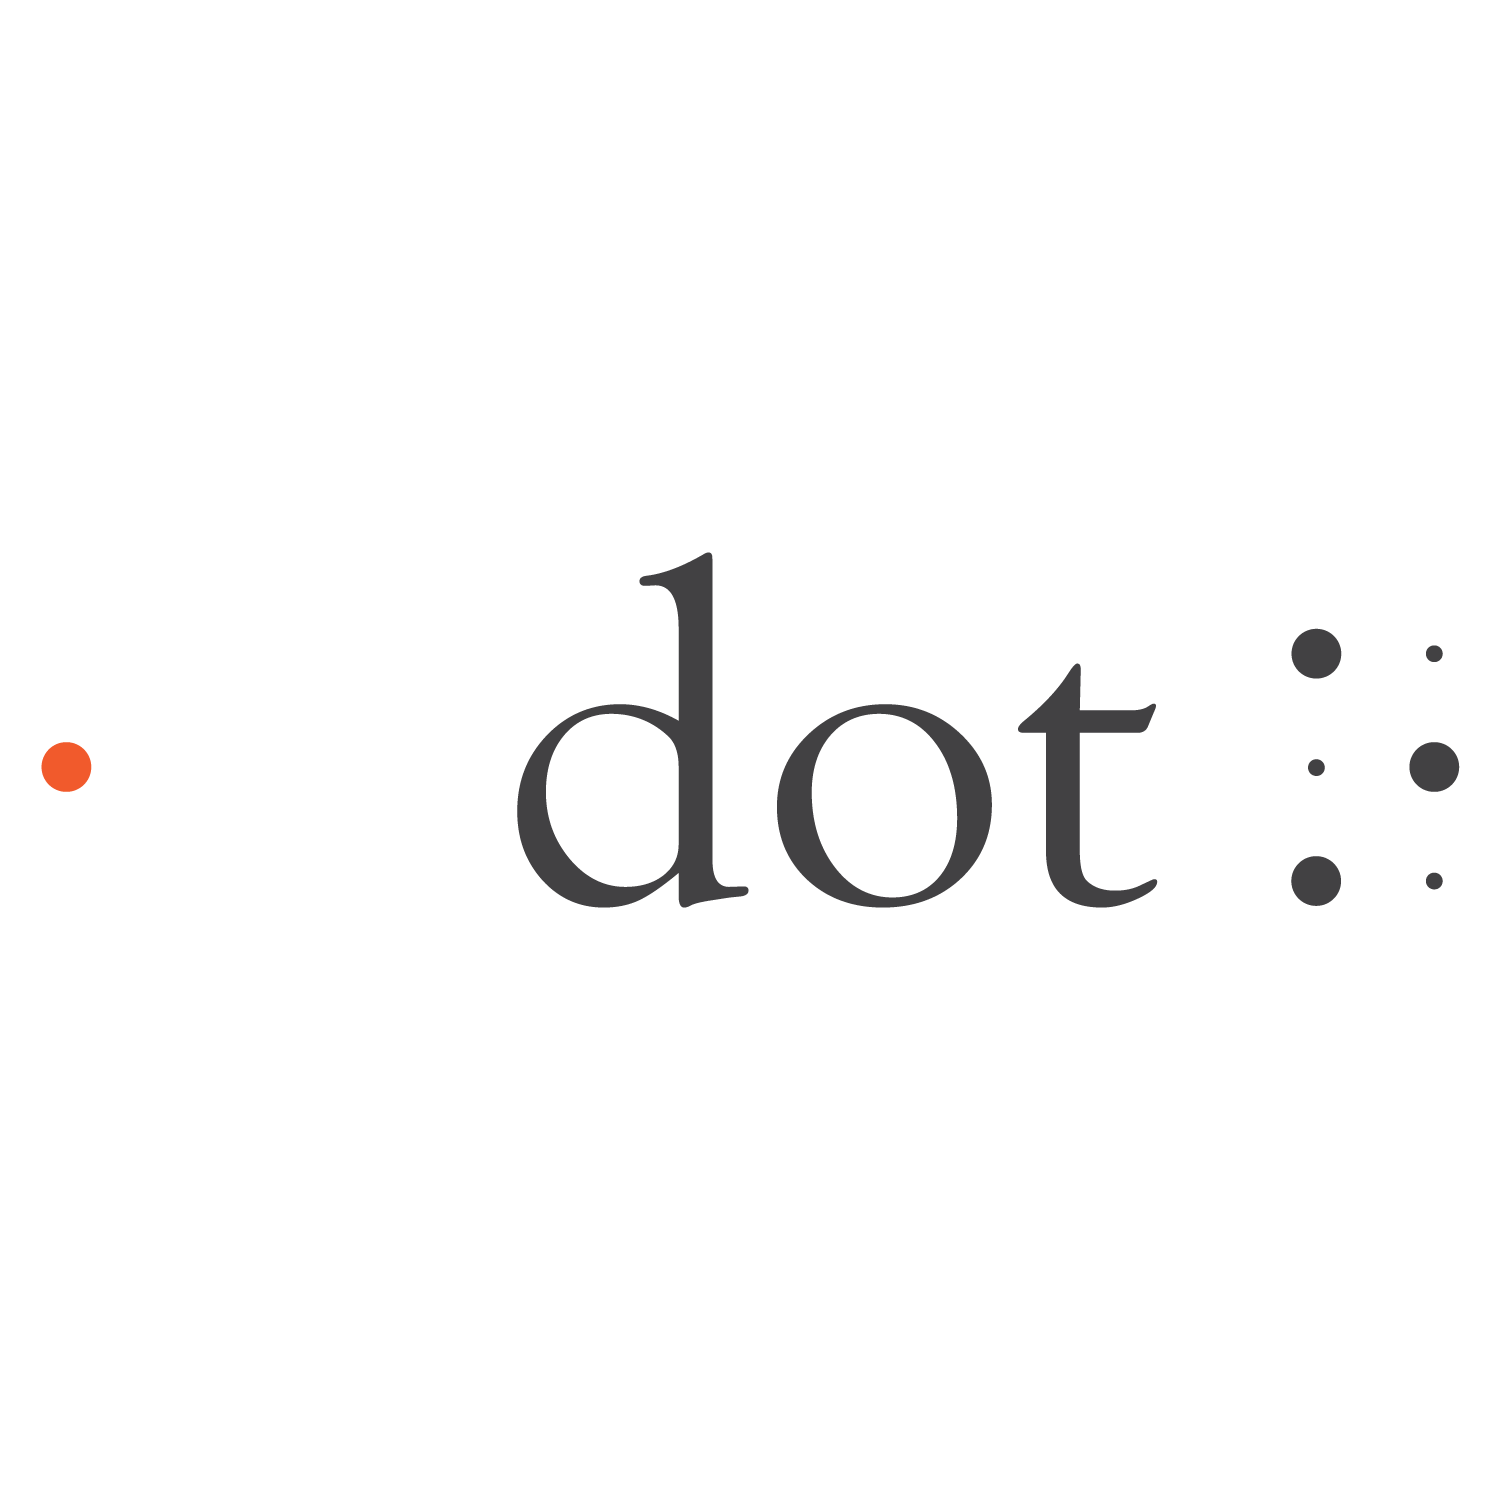 Dot Inc.